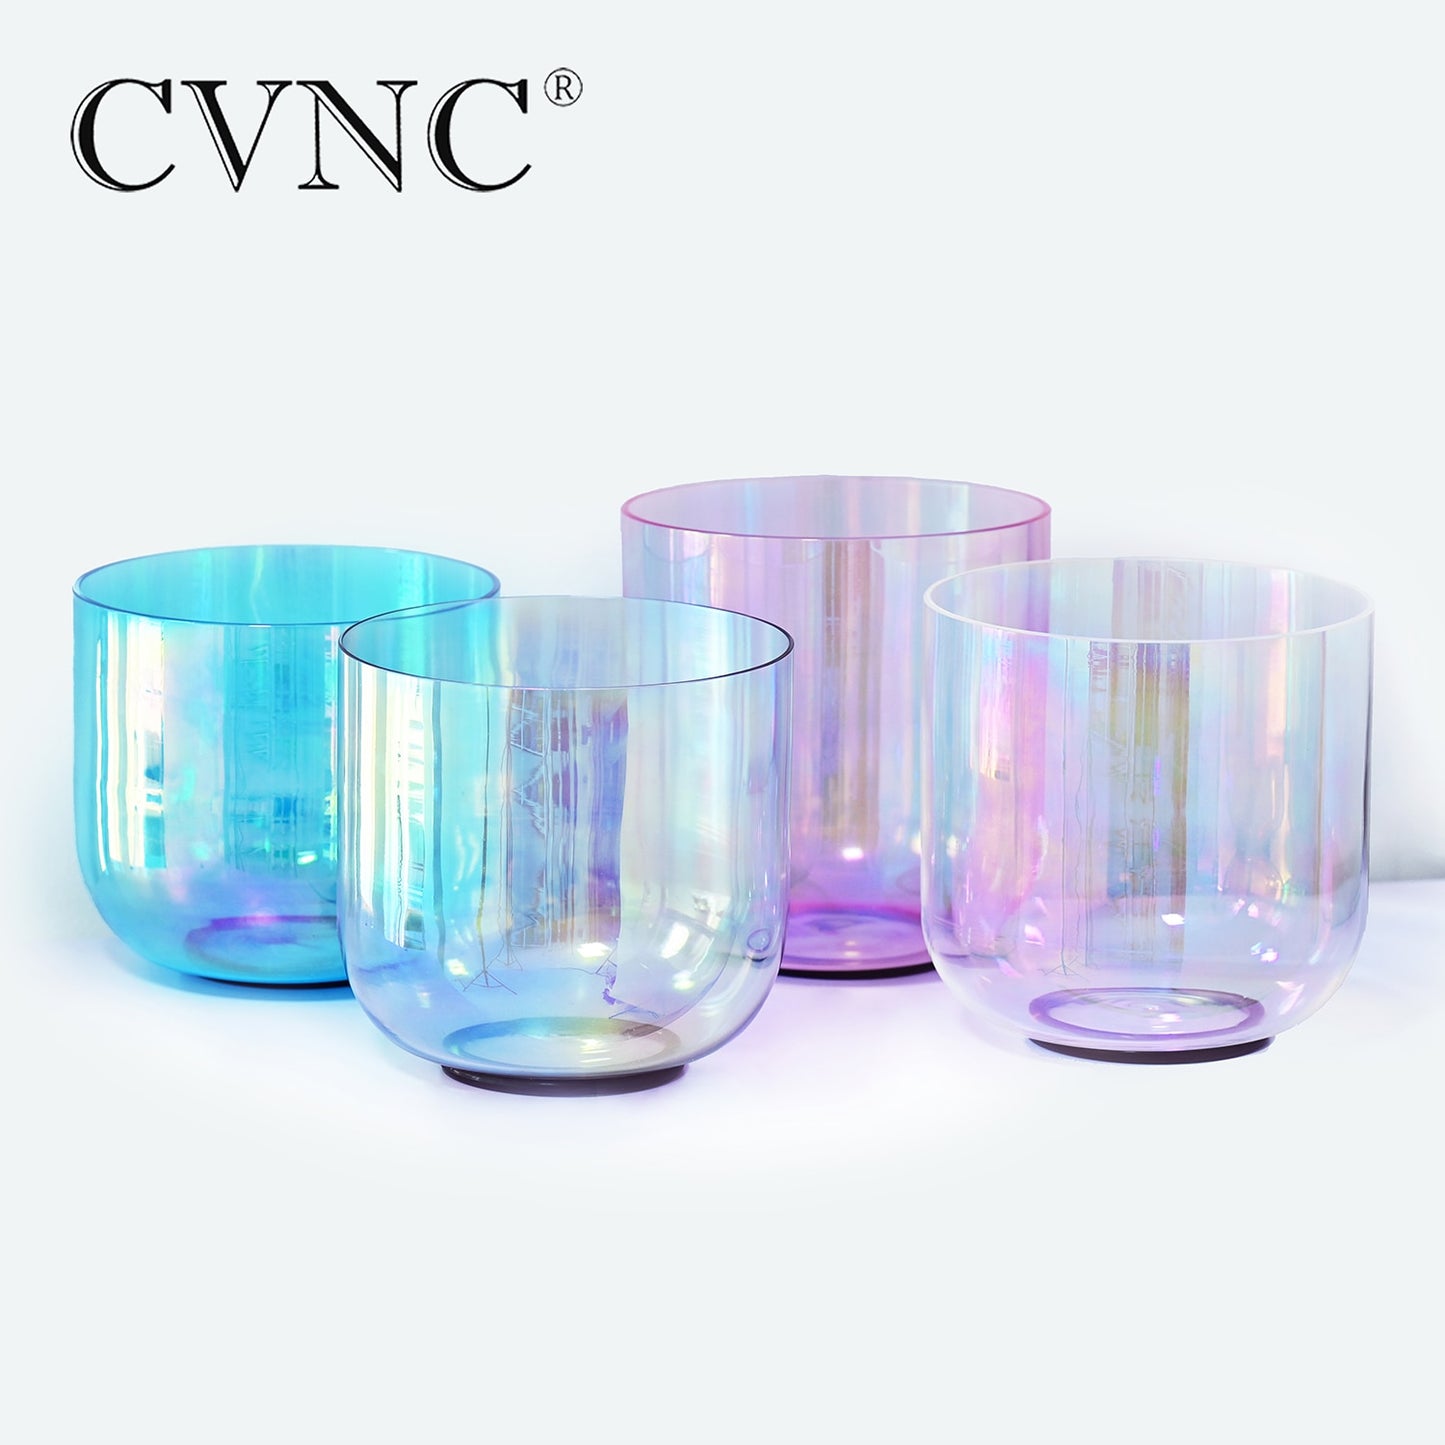 CVNC 6 Inch A Third Eye Shining Clear Chakra Crystal Singing Bowl with Cosmic Light for Energy Balance Vibration Harmony